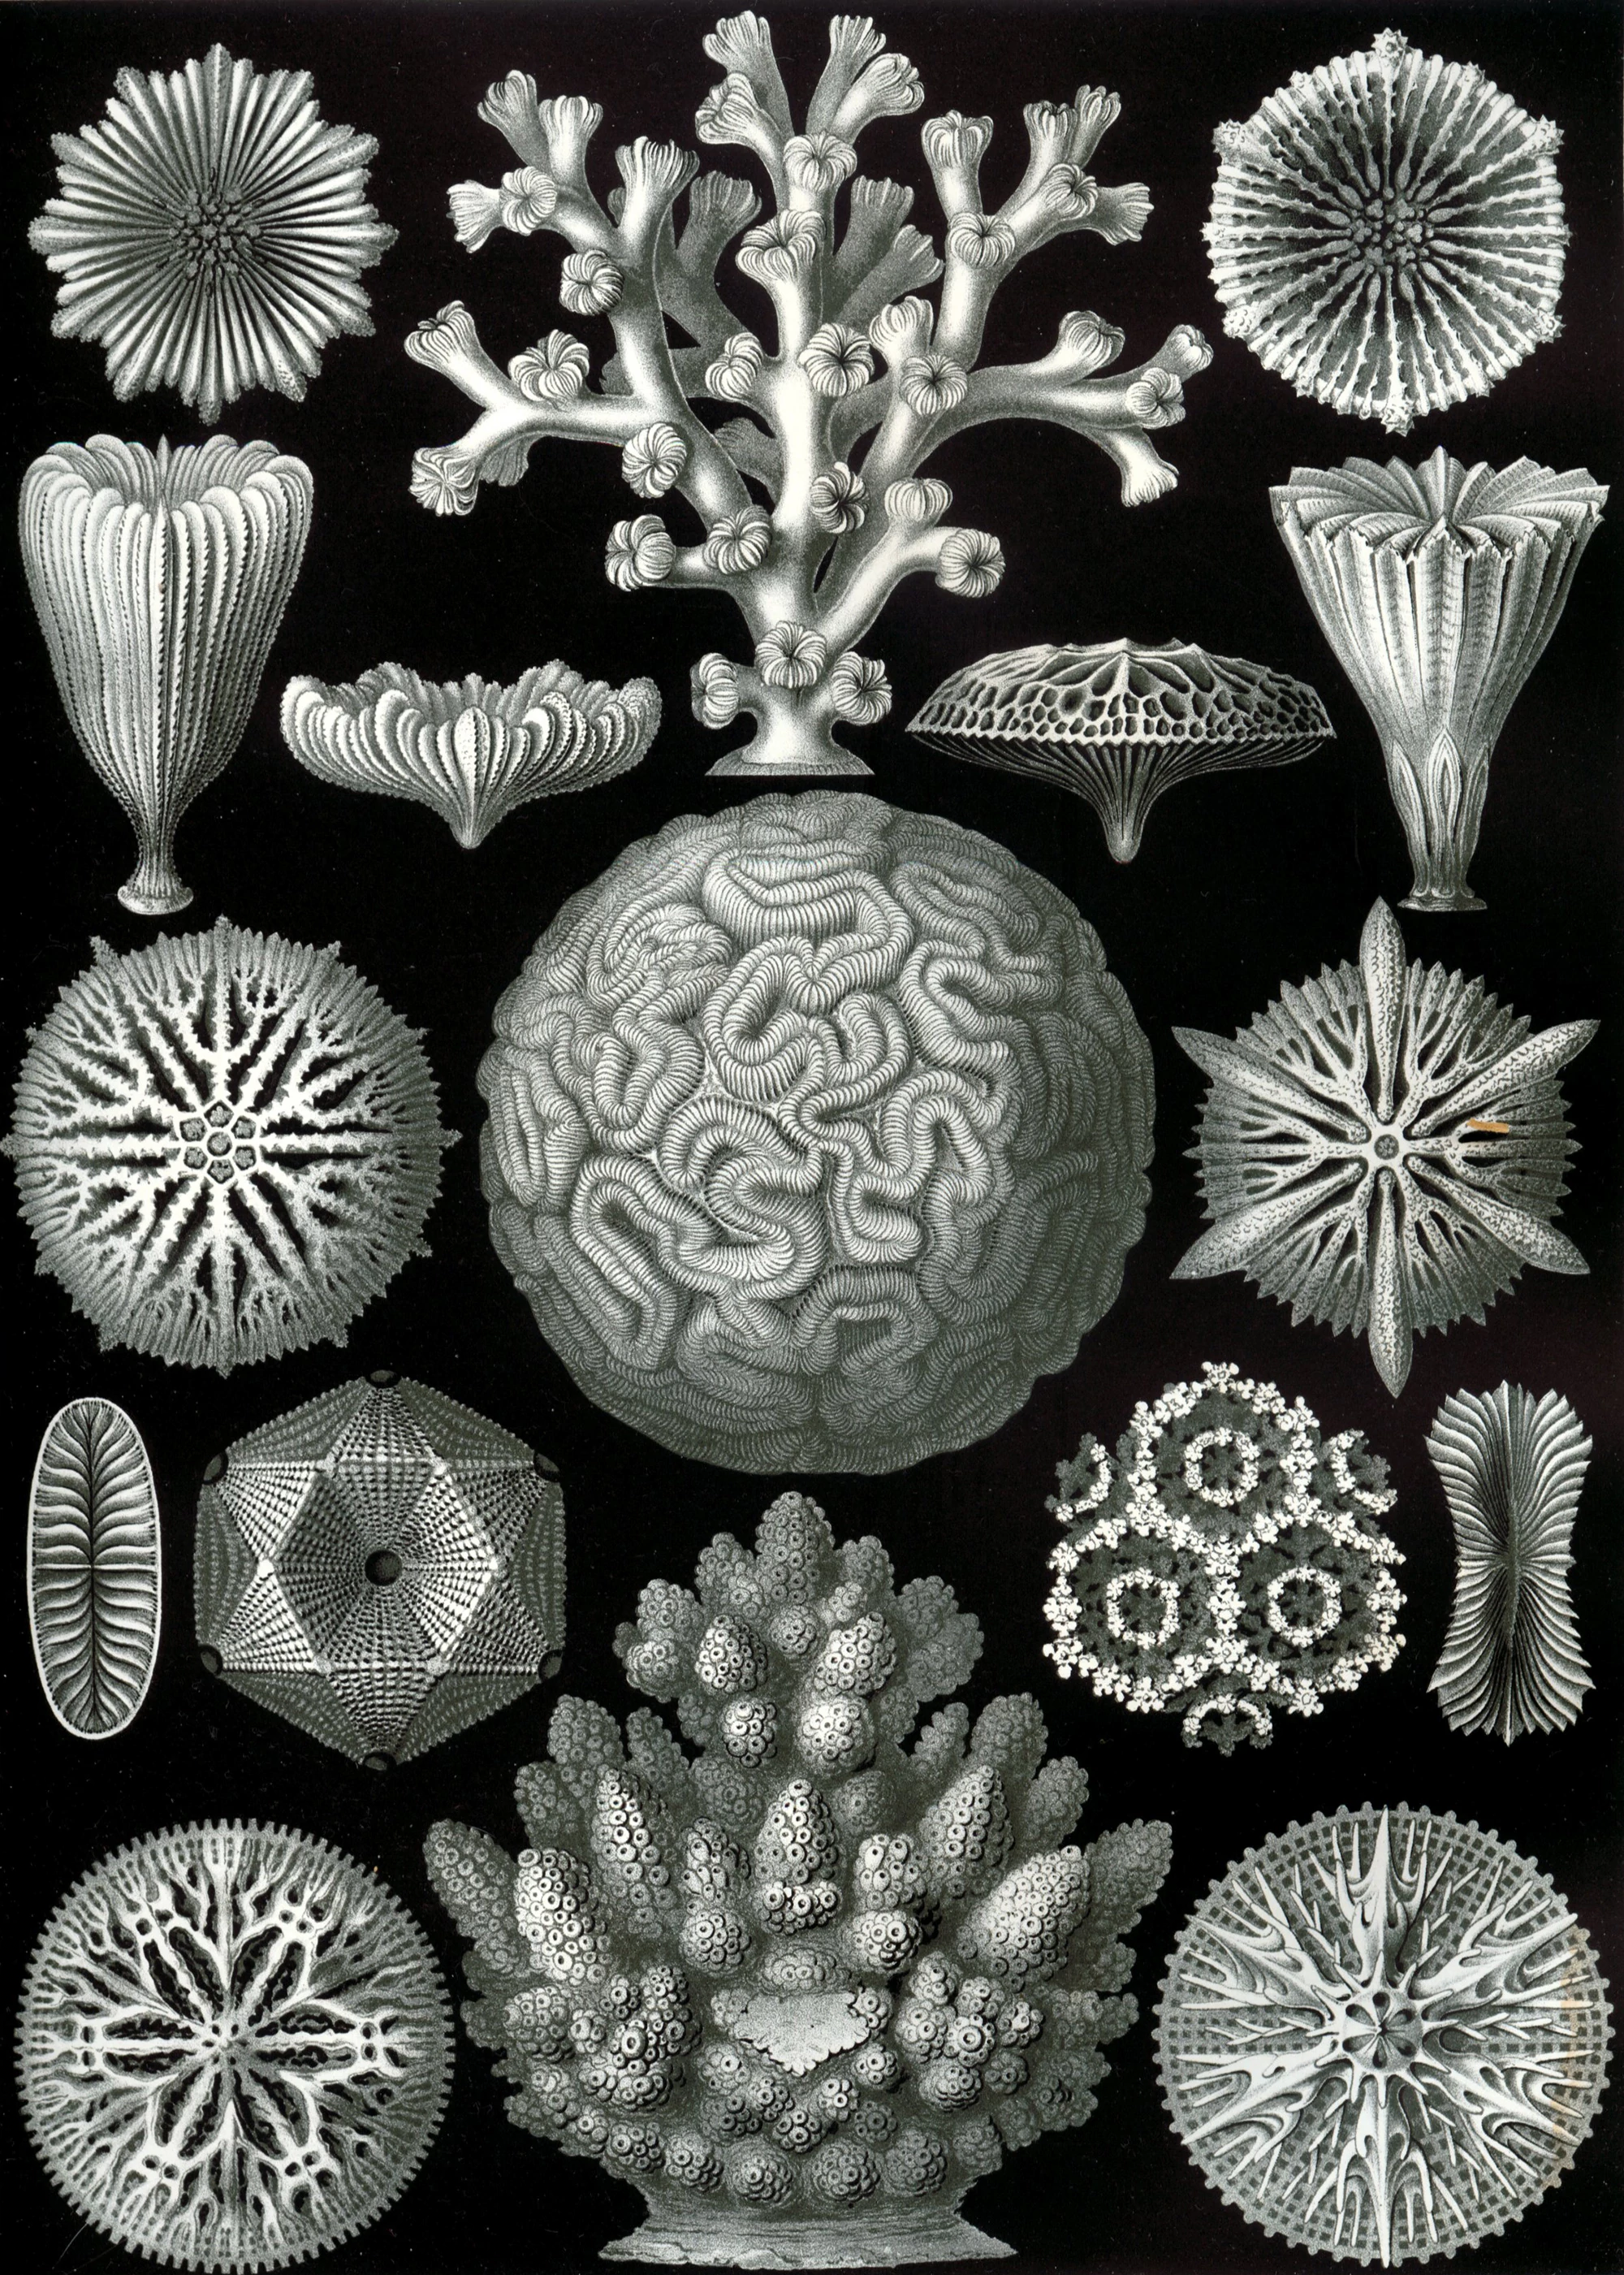 Art Forms in Nature, Plate 58: Hexacoralla, Ernst Haeckel